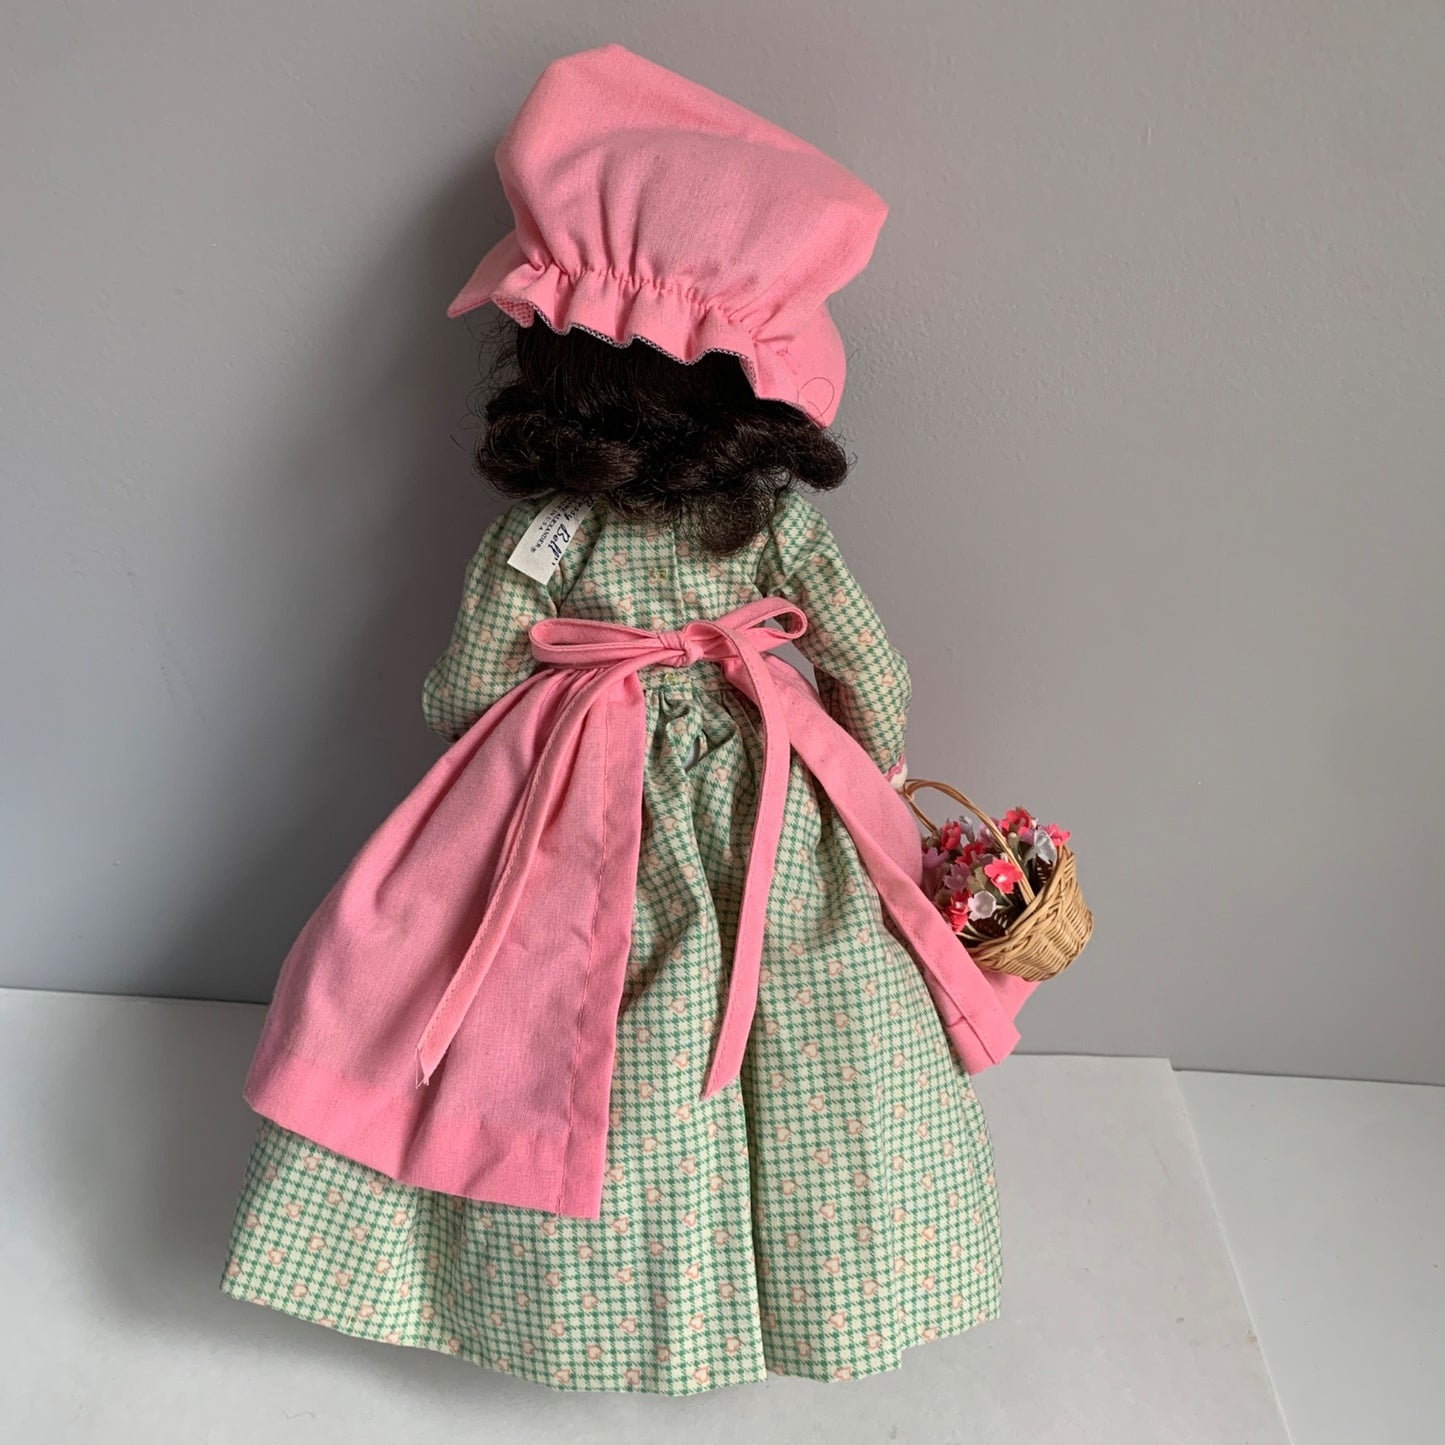 Madame Alexander Bessy Bell Doll In Original Box